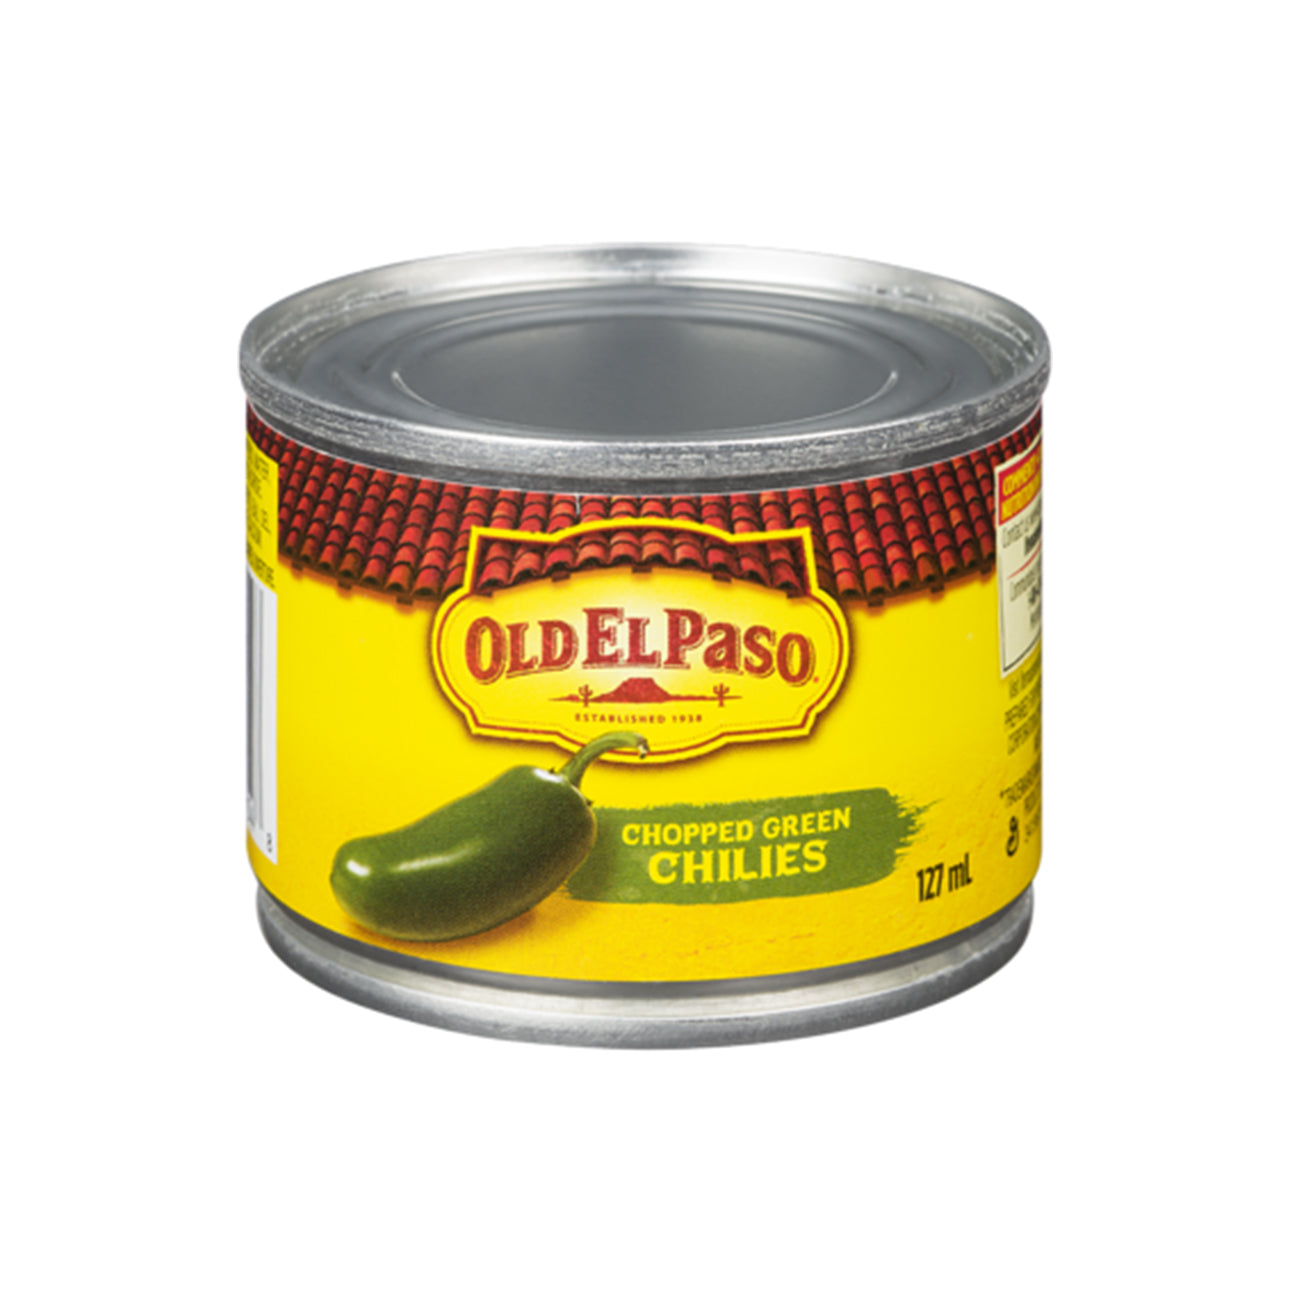 Old ElPaso Green Chilies Chopped, 127ml